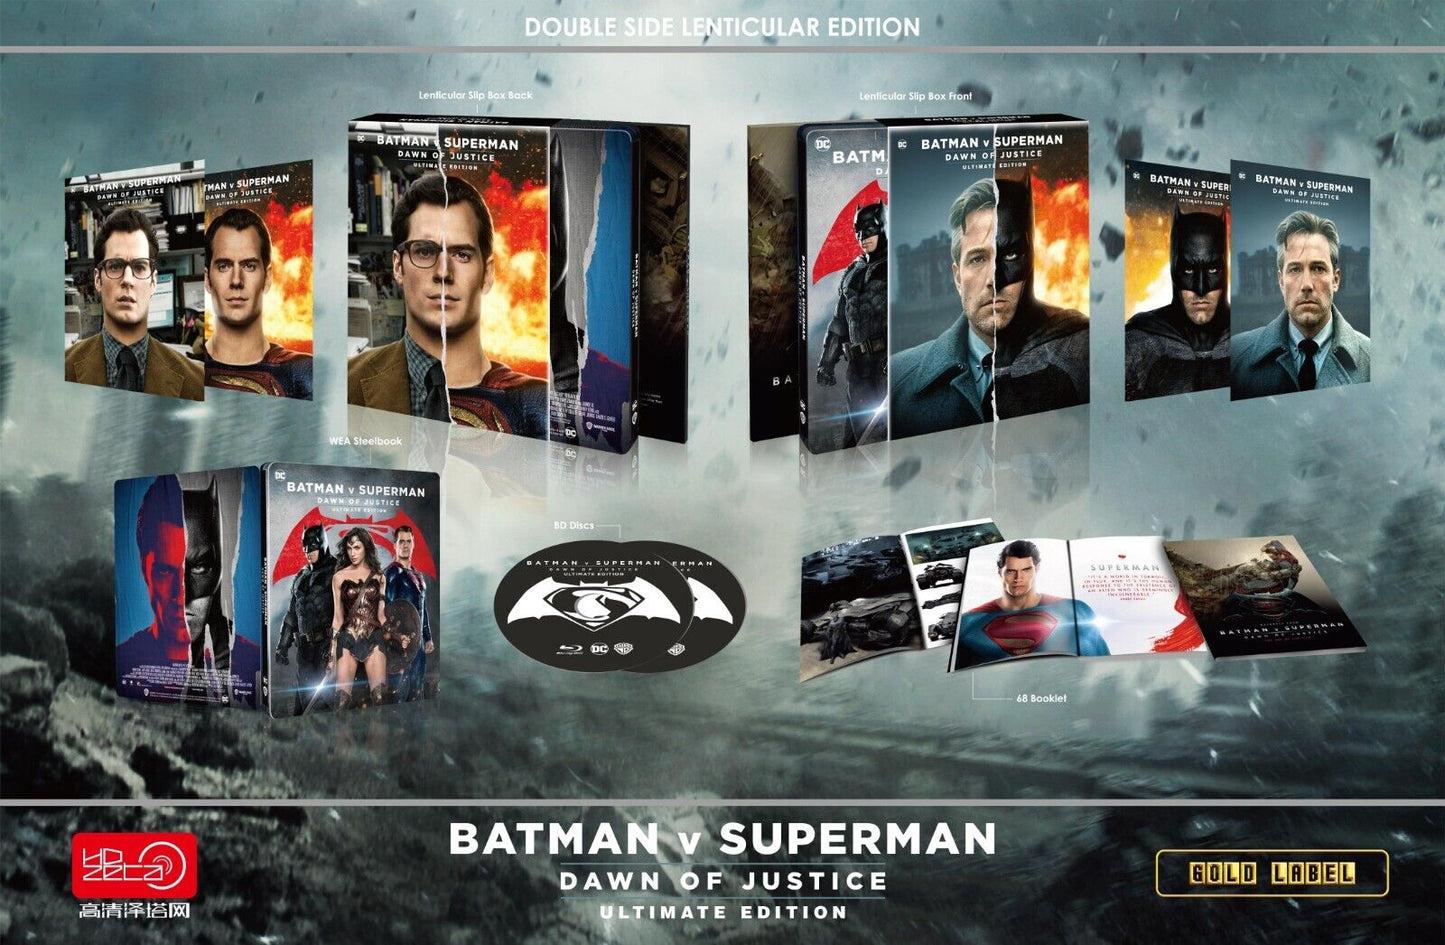 Batman v Superman: Dawn Of Justice 4K Blu-ray Steelbook HDZeta Exclusive Gold Label Box Set